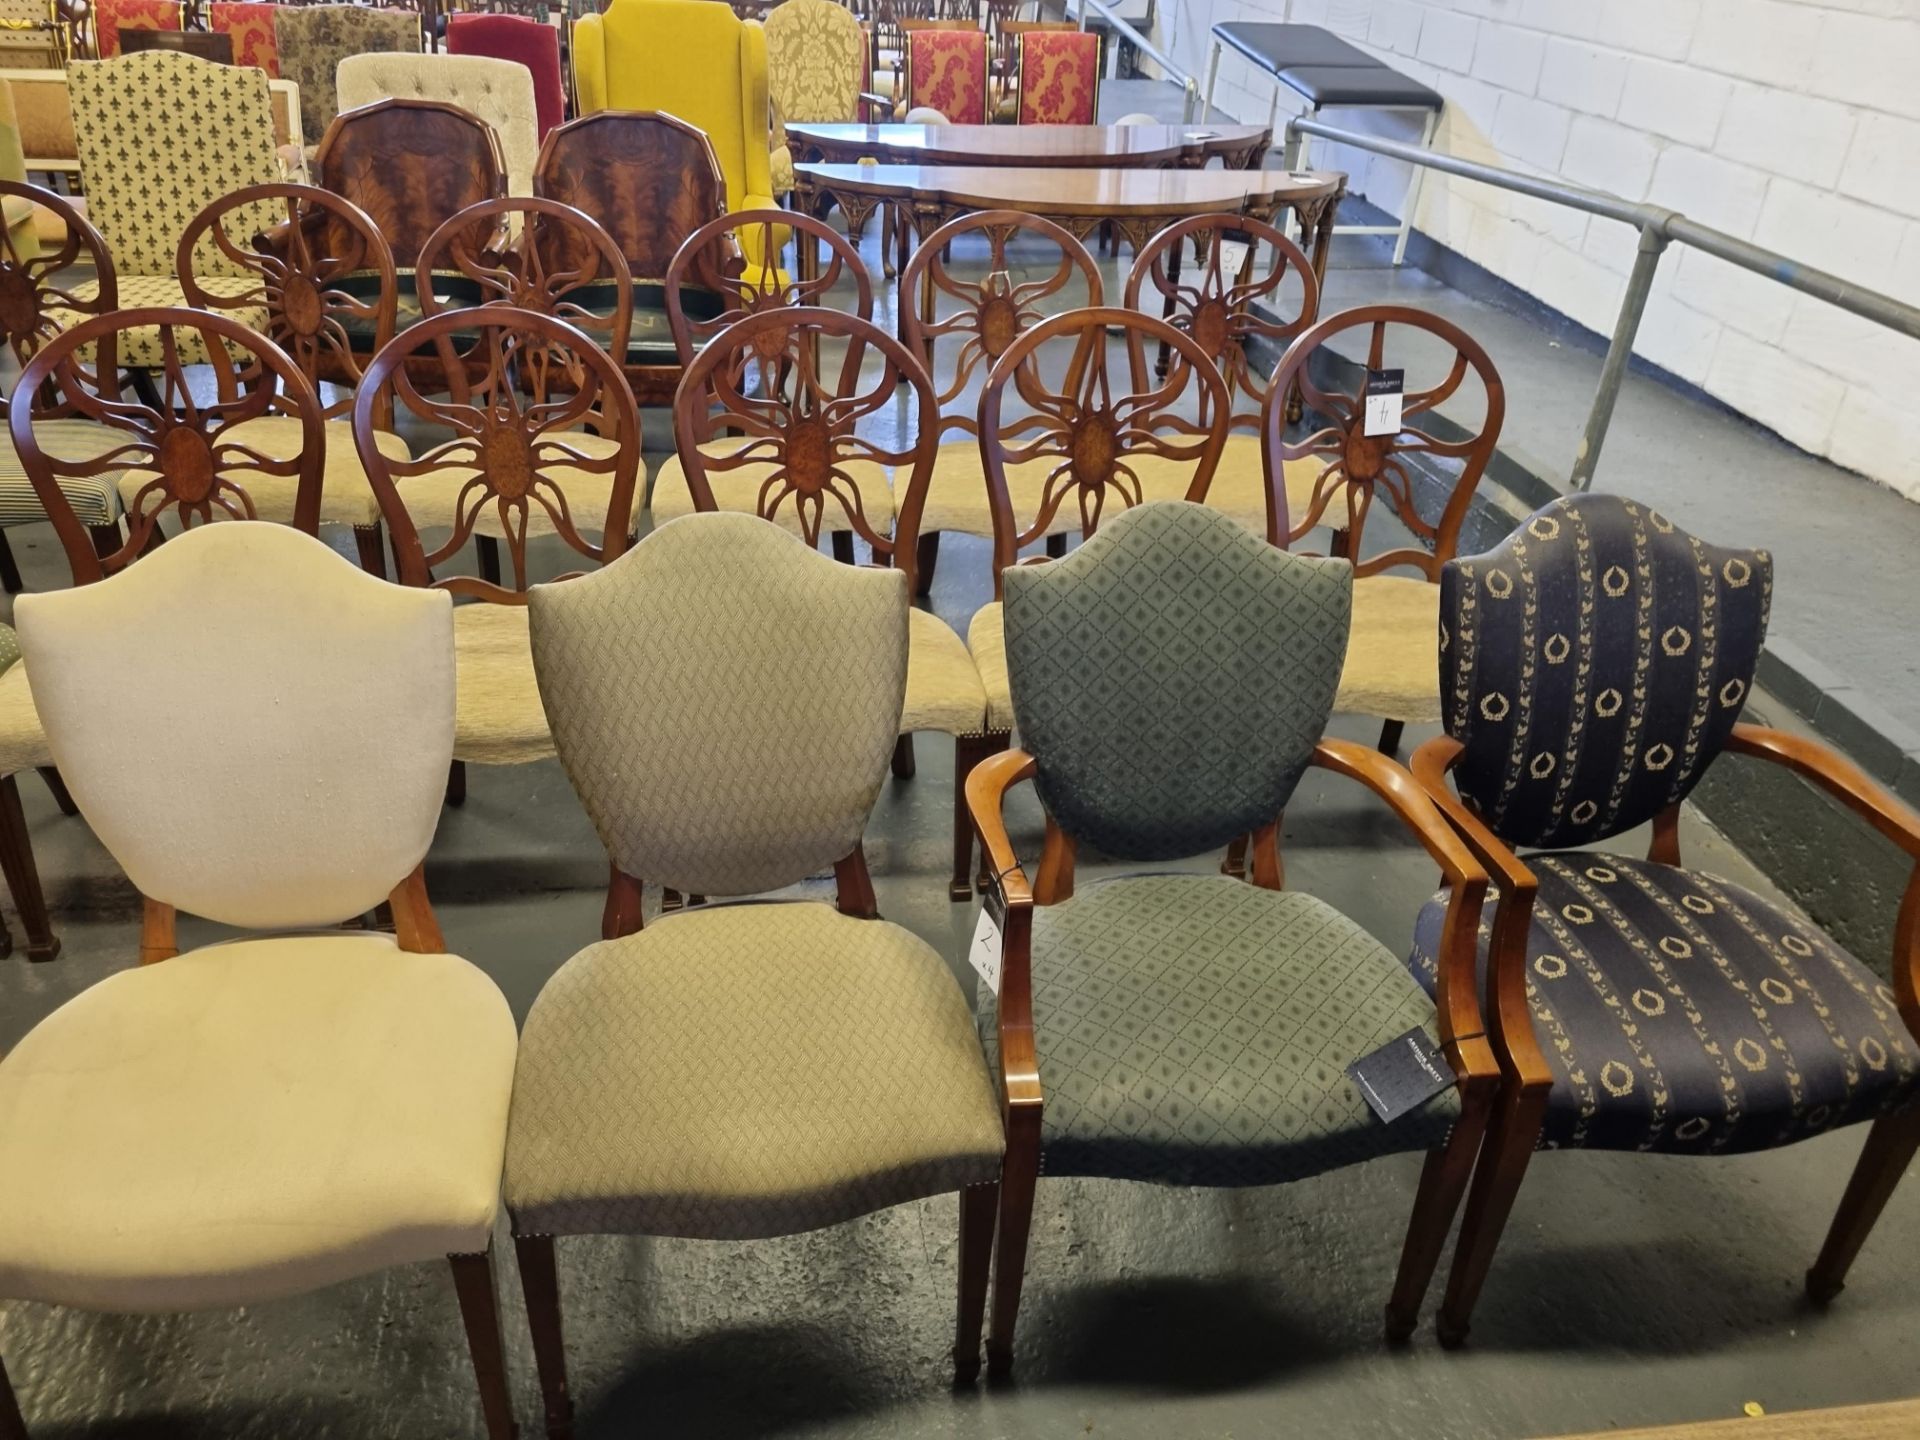 4 X Arthur Brett Upholstered Shield Back Chairs In Assorted Bespoke Upholstery The Shield Back Shape - Image 2 of 5